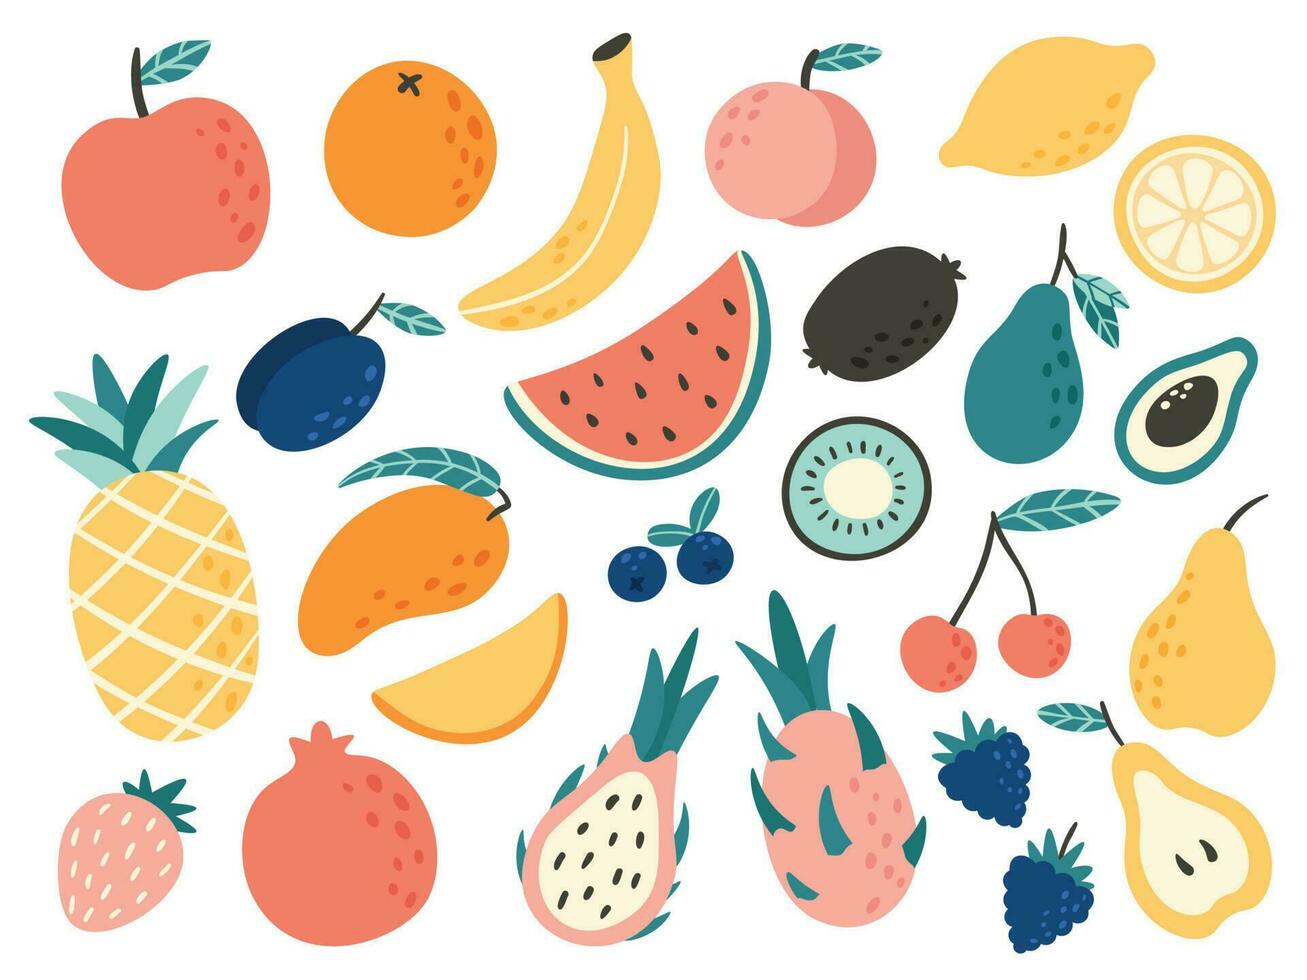 garabatear frutas natural tropical fruta, garabatos agrios naranja y vitamina limón. vegano cocina manzana mano dibujado vector ilustración